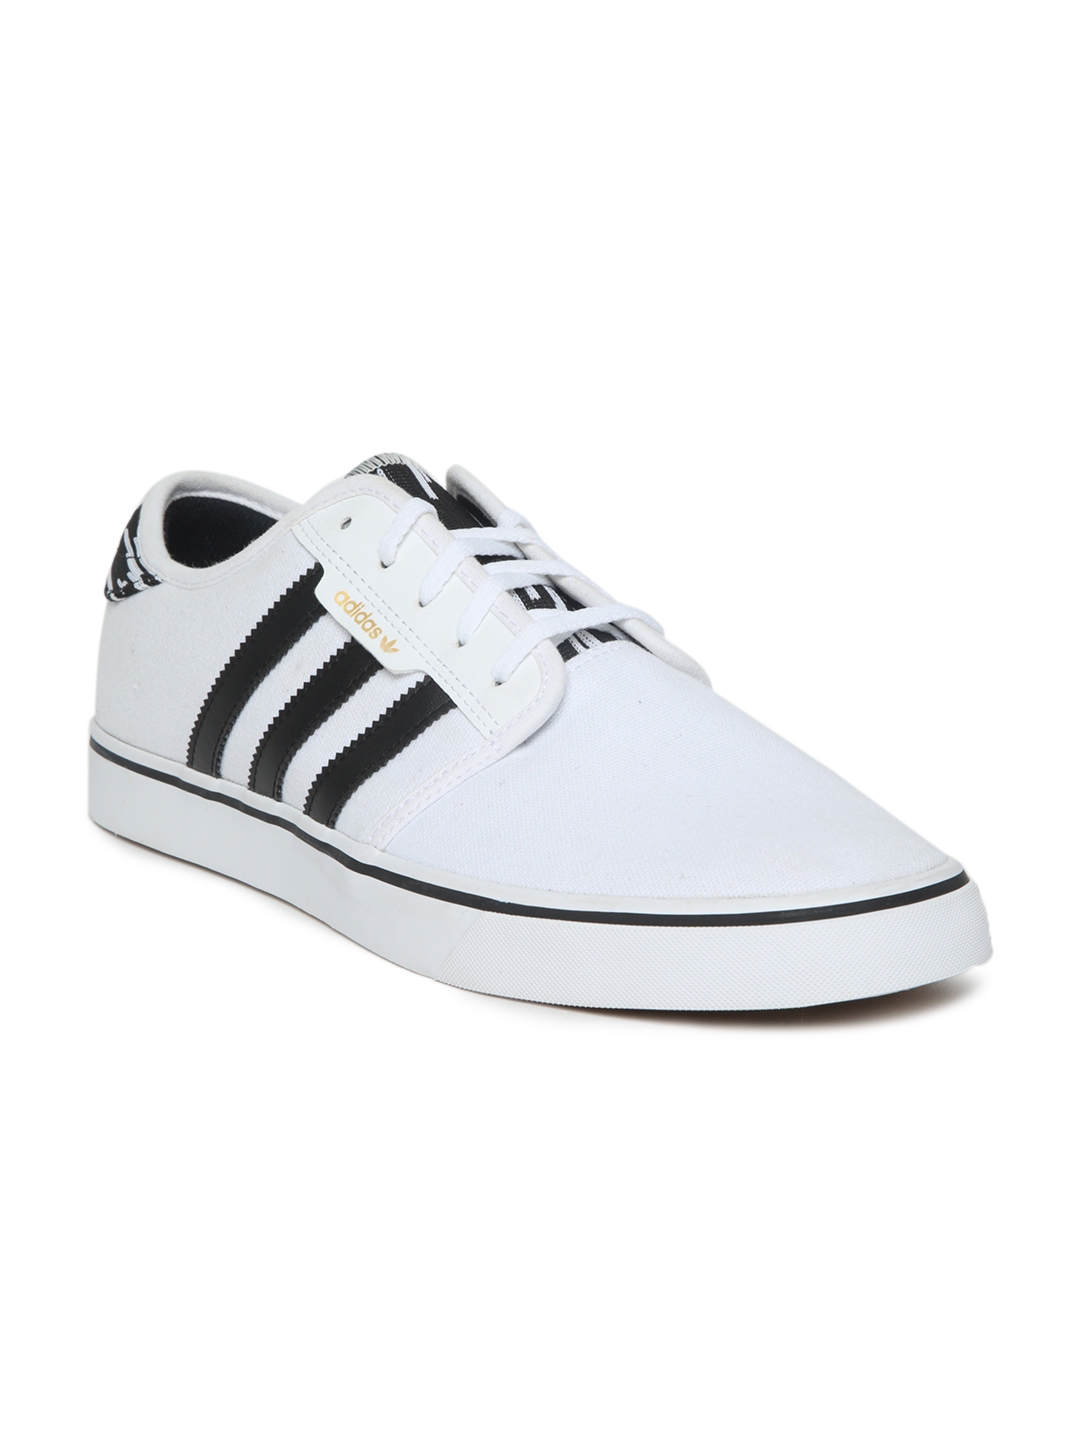 Buy ADIDAS Originals Men White Sneakers - Casual Shoes for Men 3098088 ...